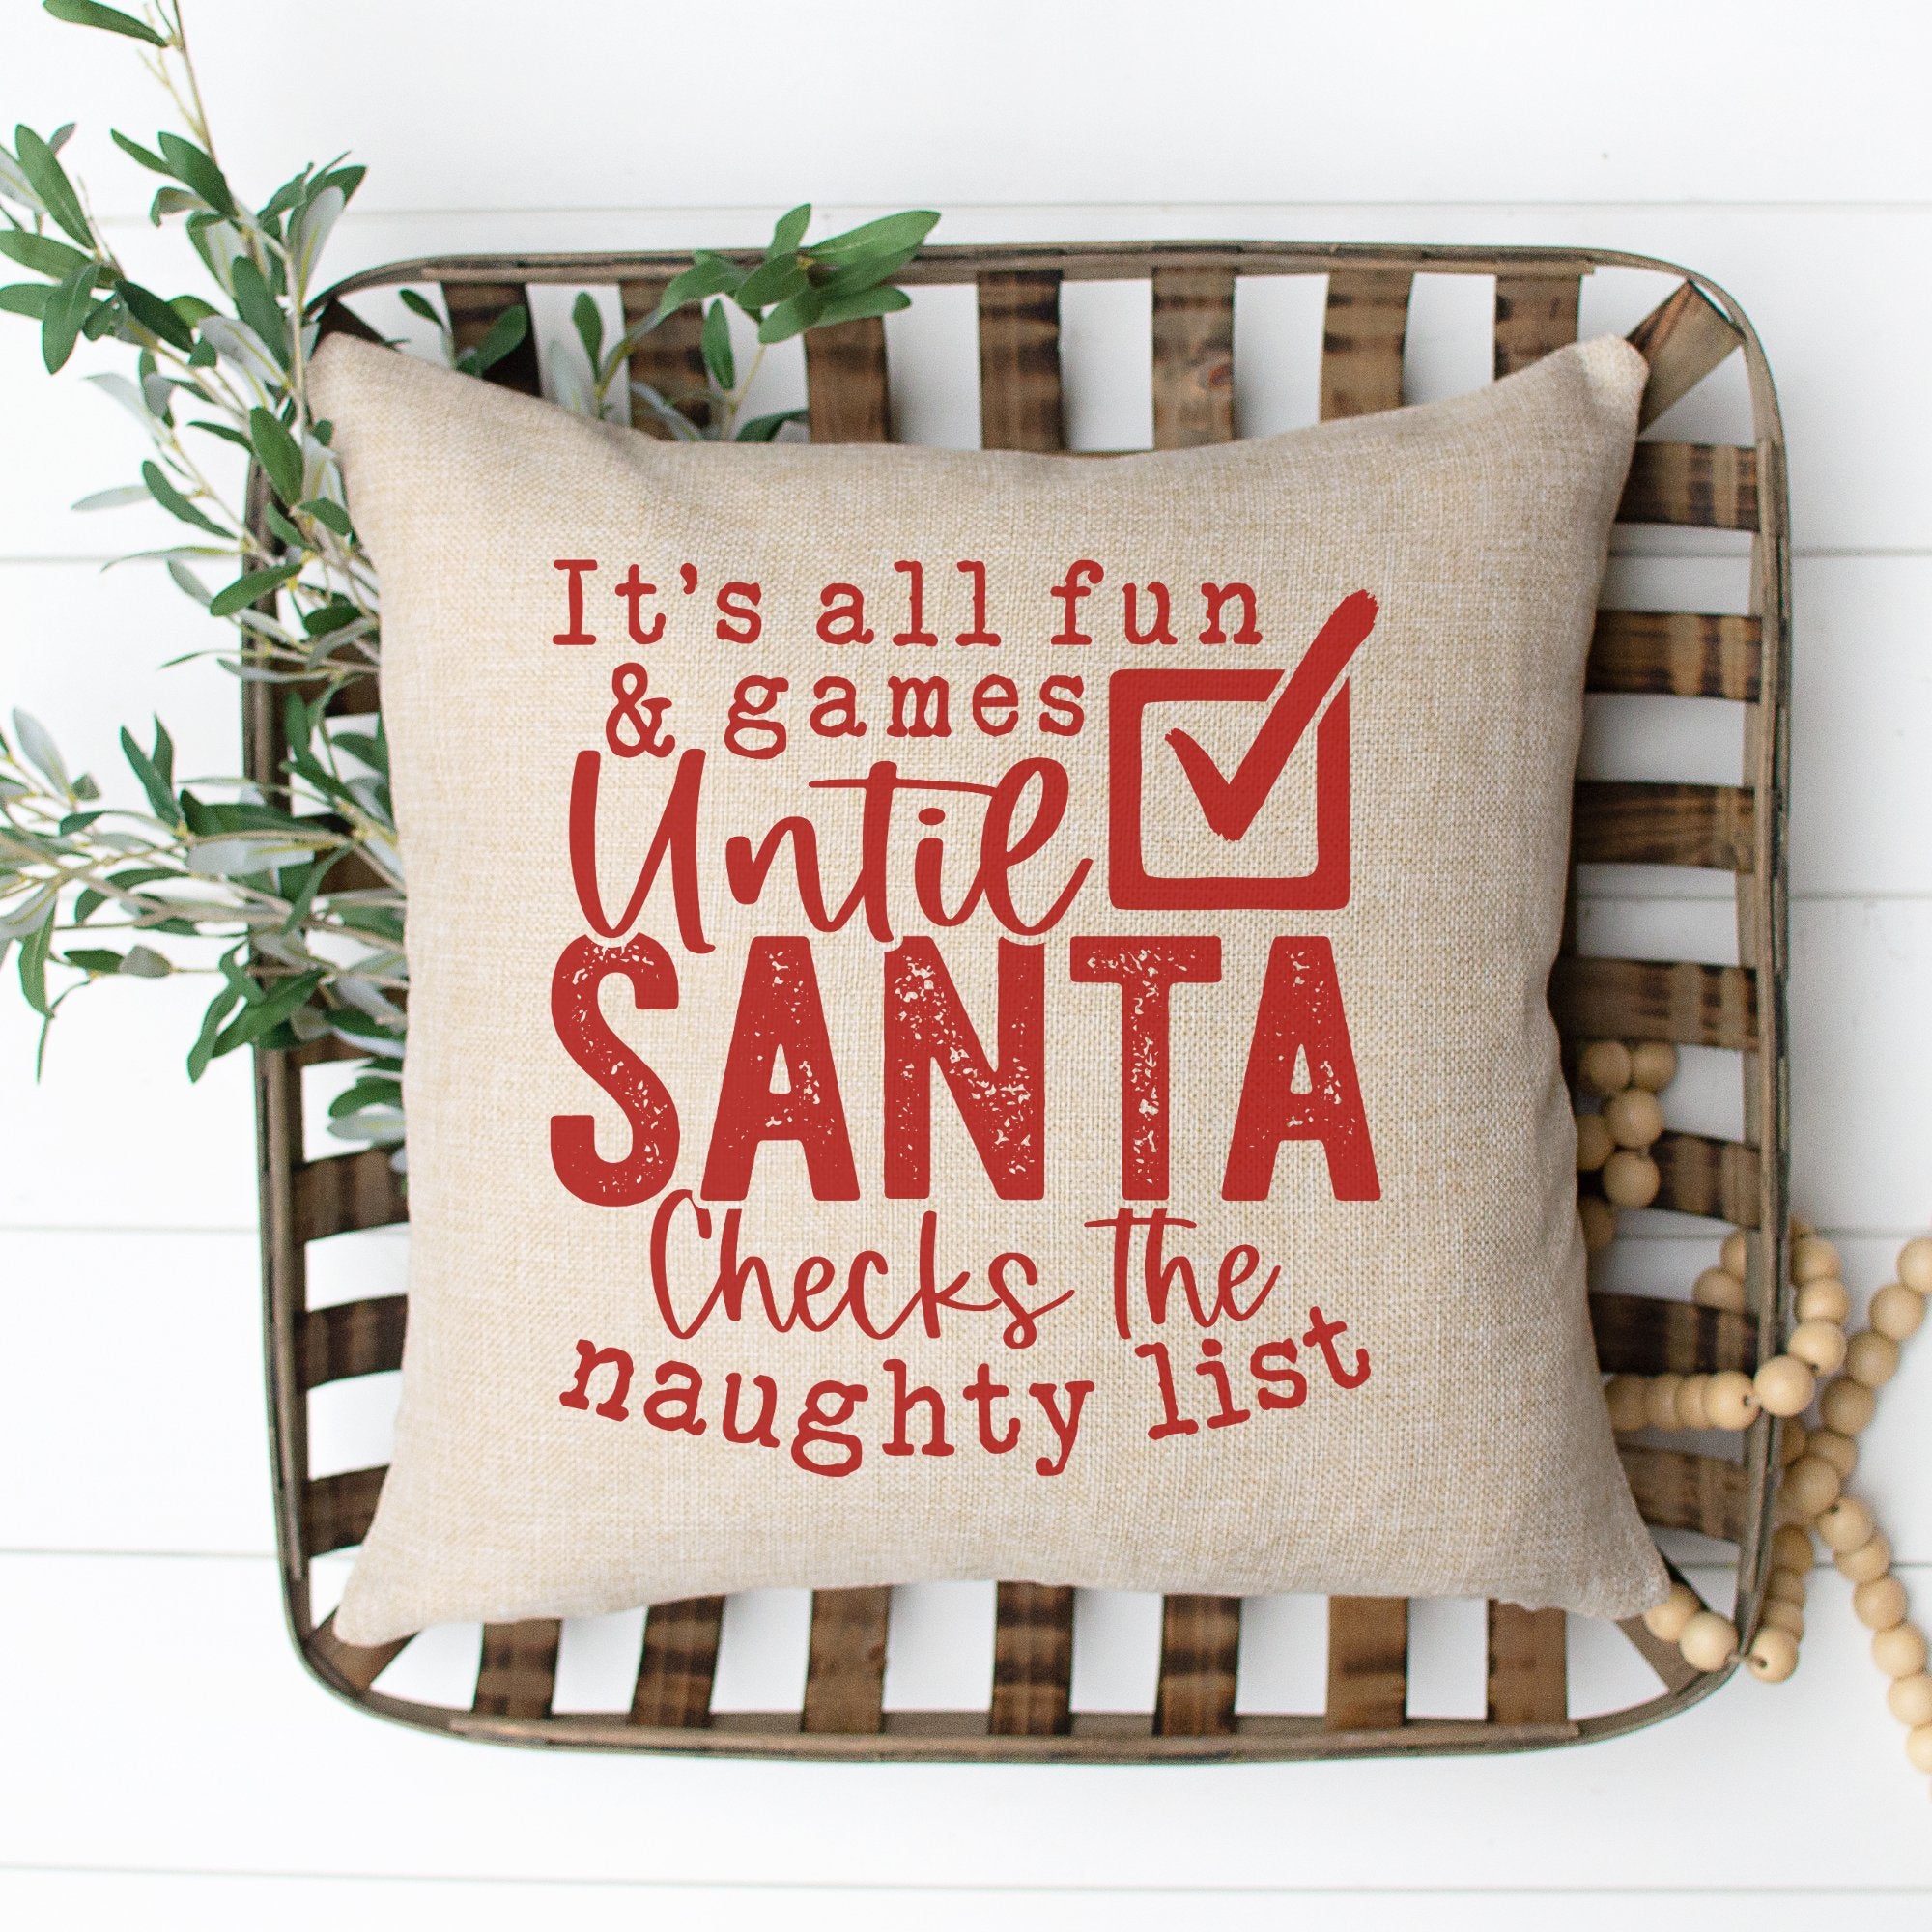 Santa Checks Naughty List Red Christmas Pillow Cover - Trendznmore